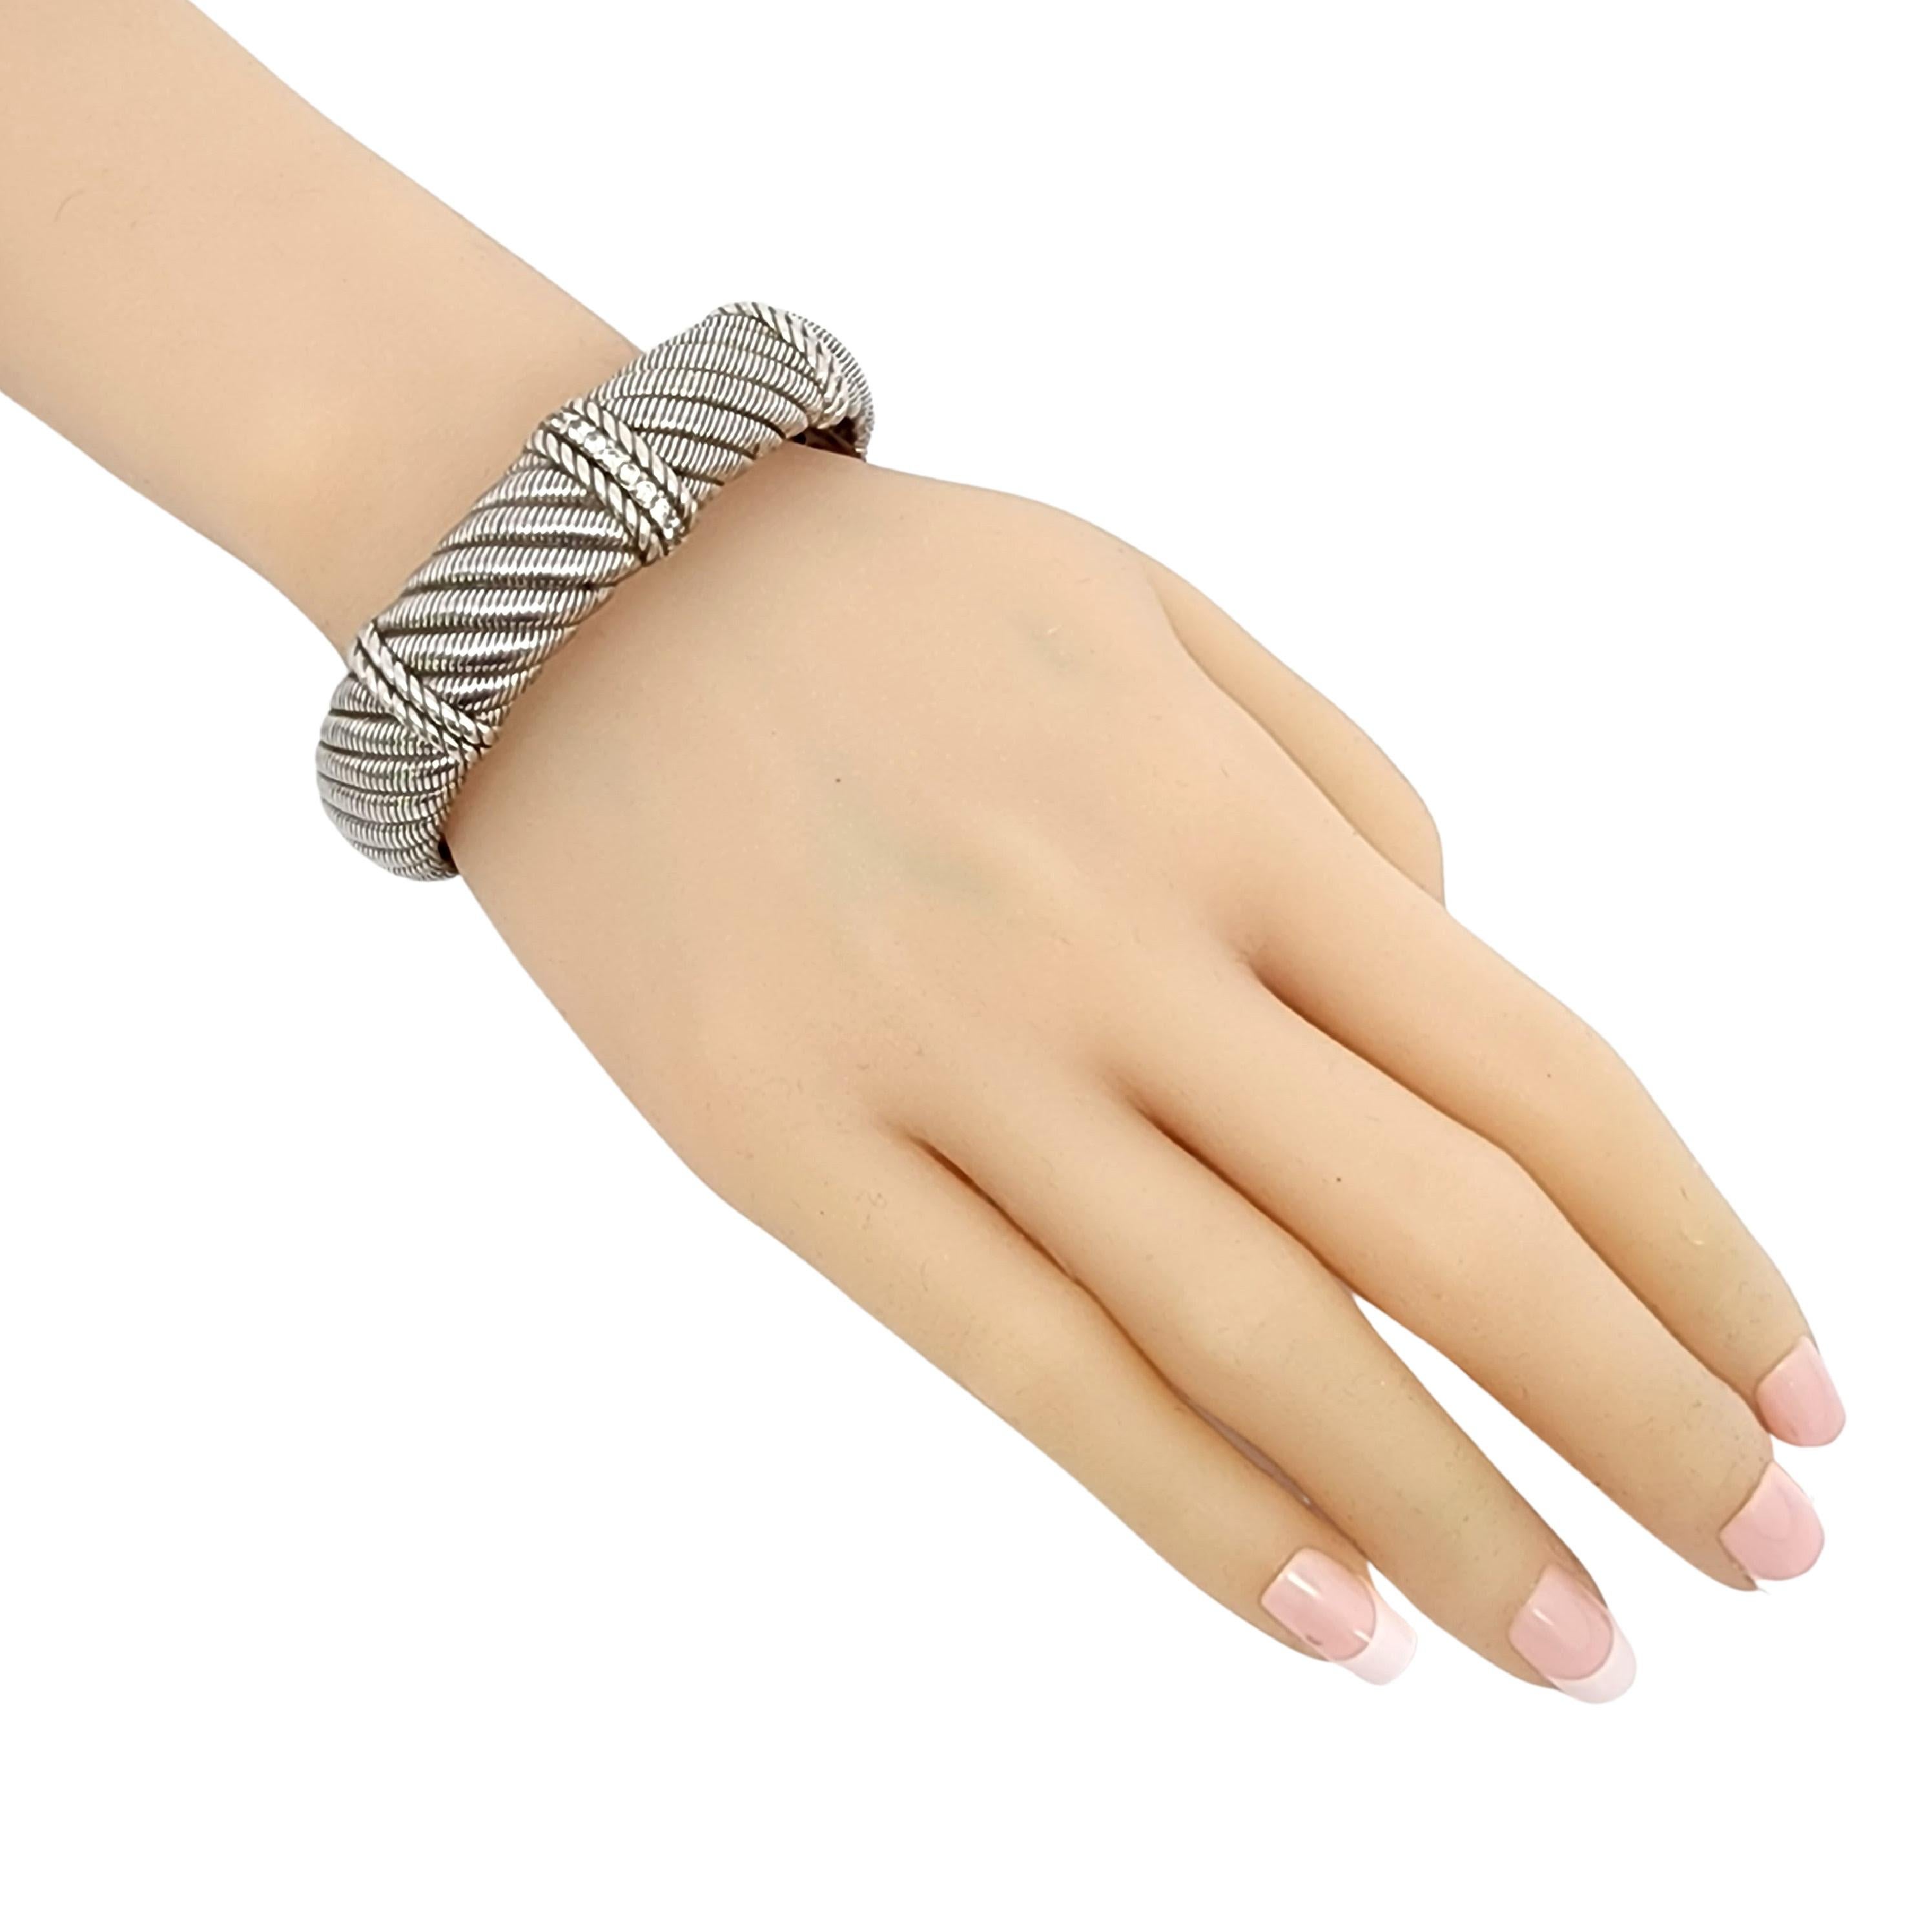 Women's Judith Ripka S S CZ Diamonique Wide Cable Twist Hinged Cuff Bracelet #12821 For Sale